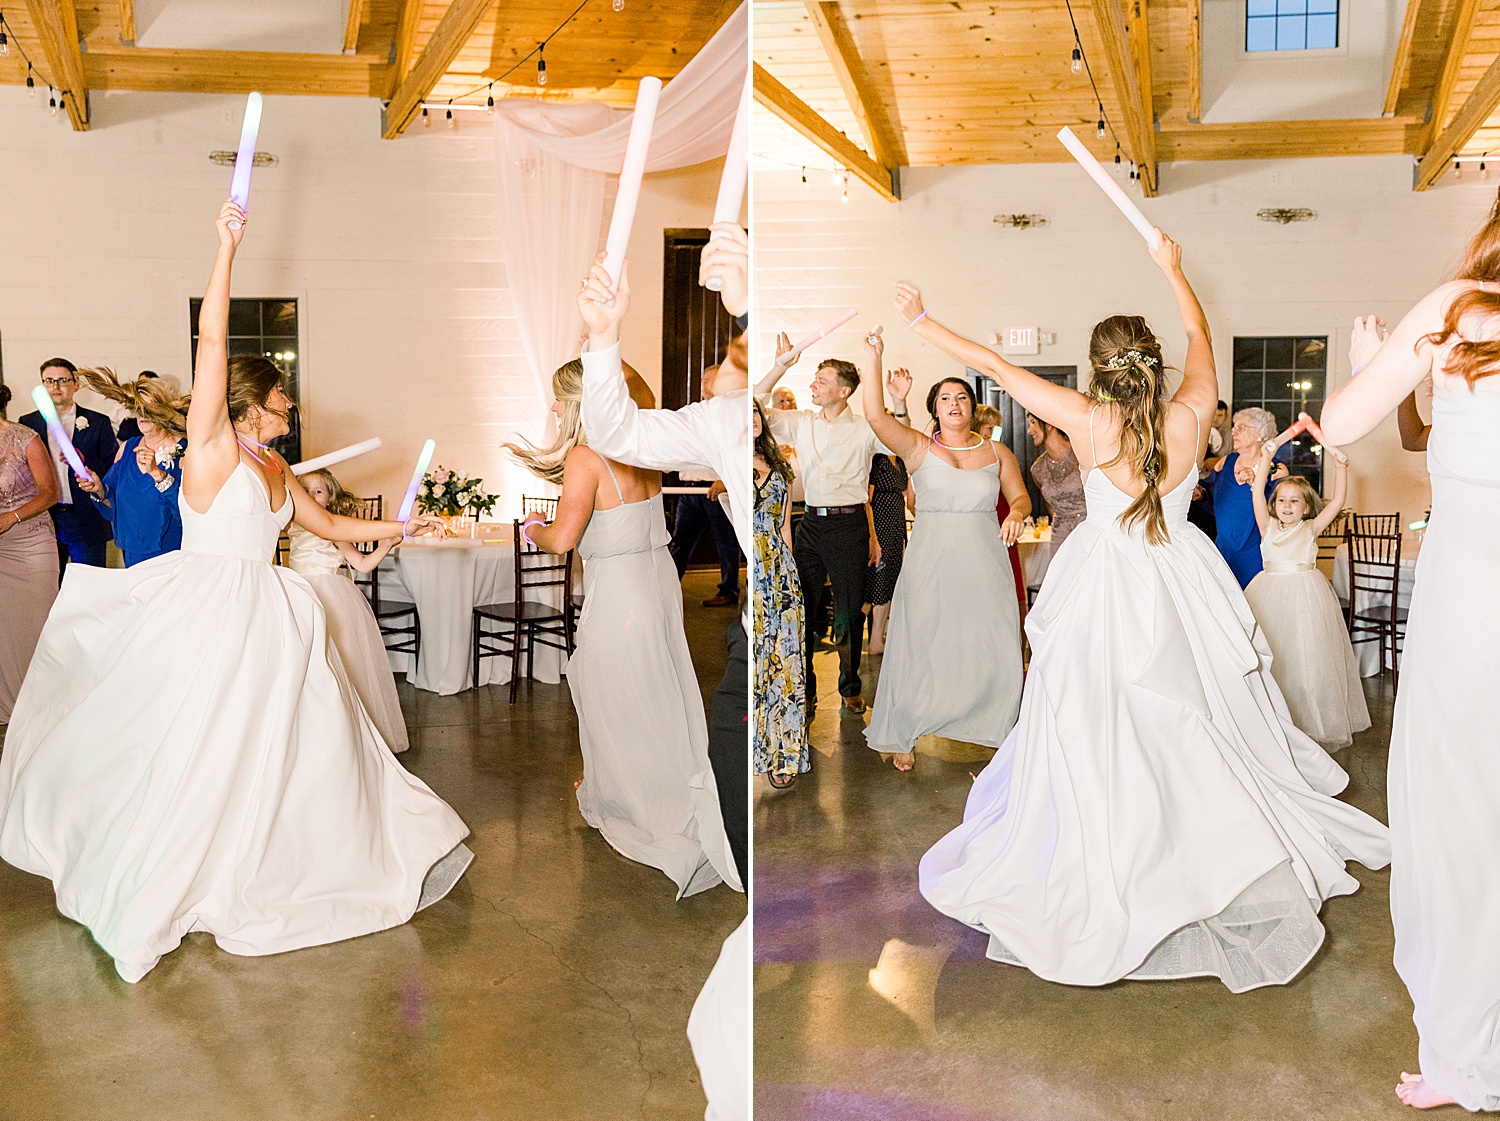 Everyone dances the night away waving glow sticks at Wedding reception